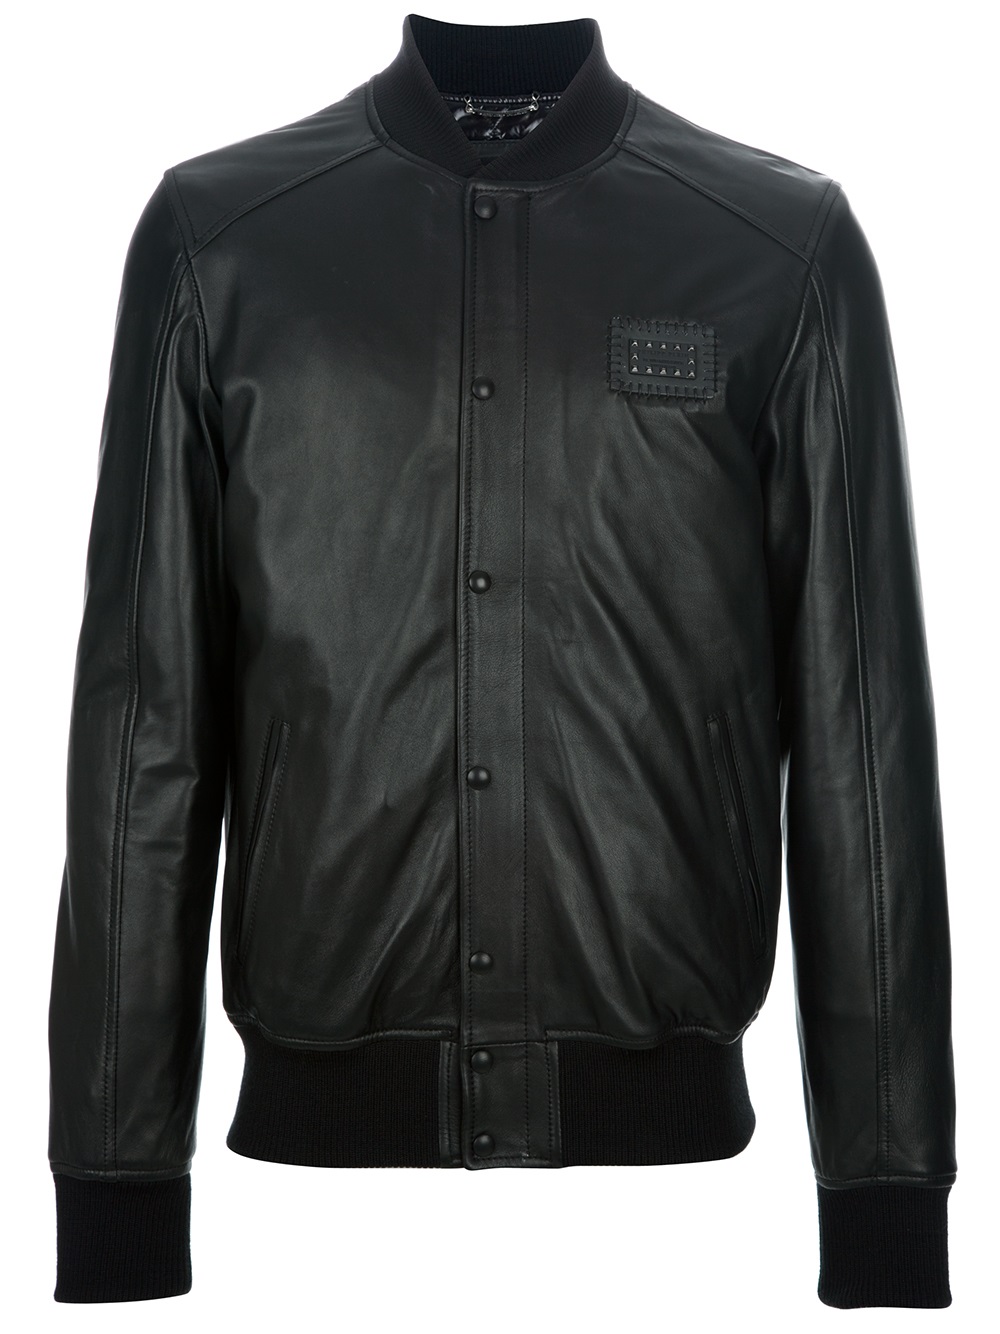 Lyst - Philipp Plein Skull Texture Jacket in Black for Men